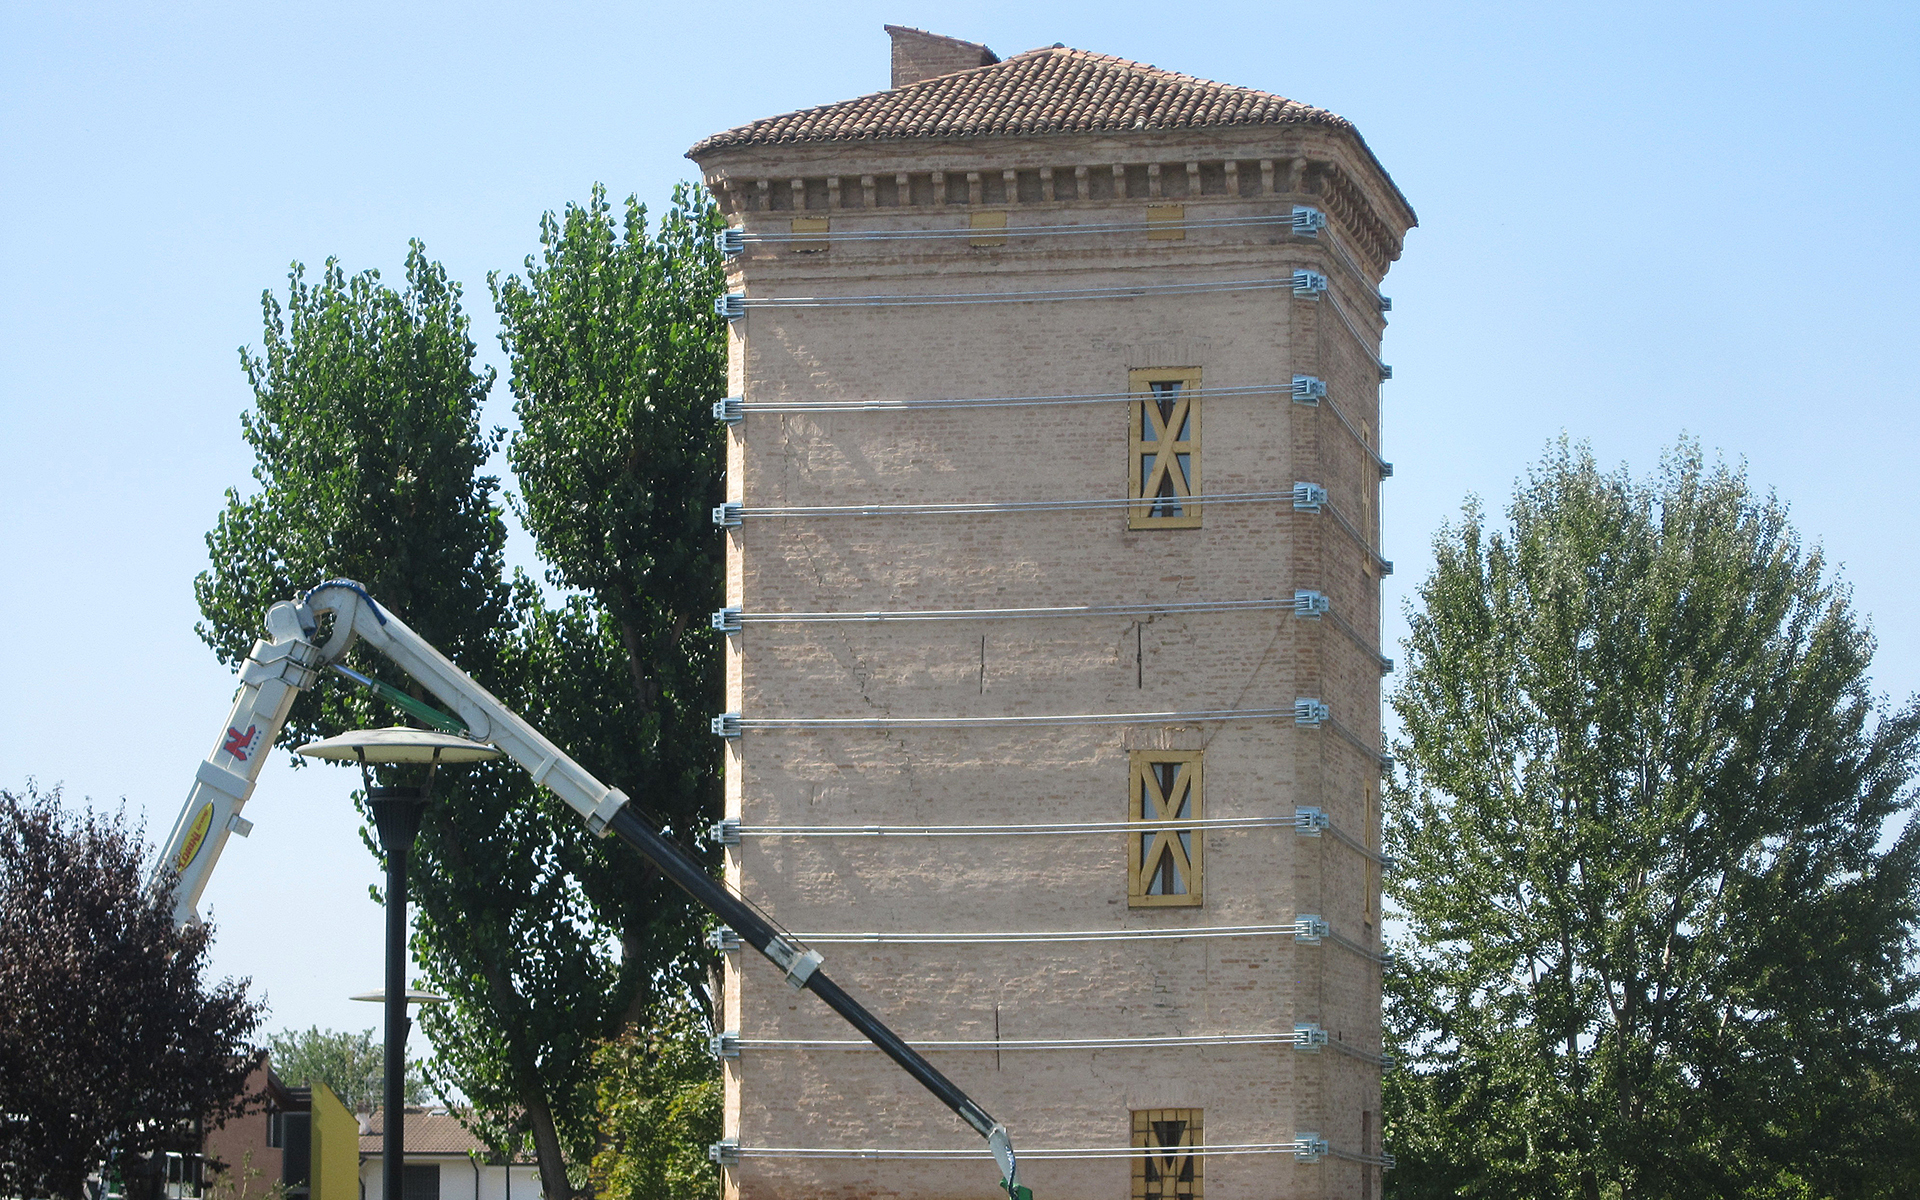 Torre falconiera